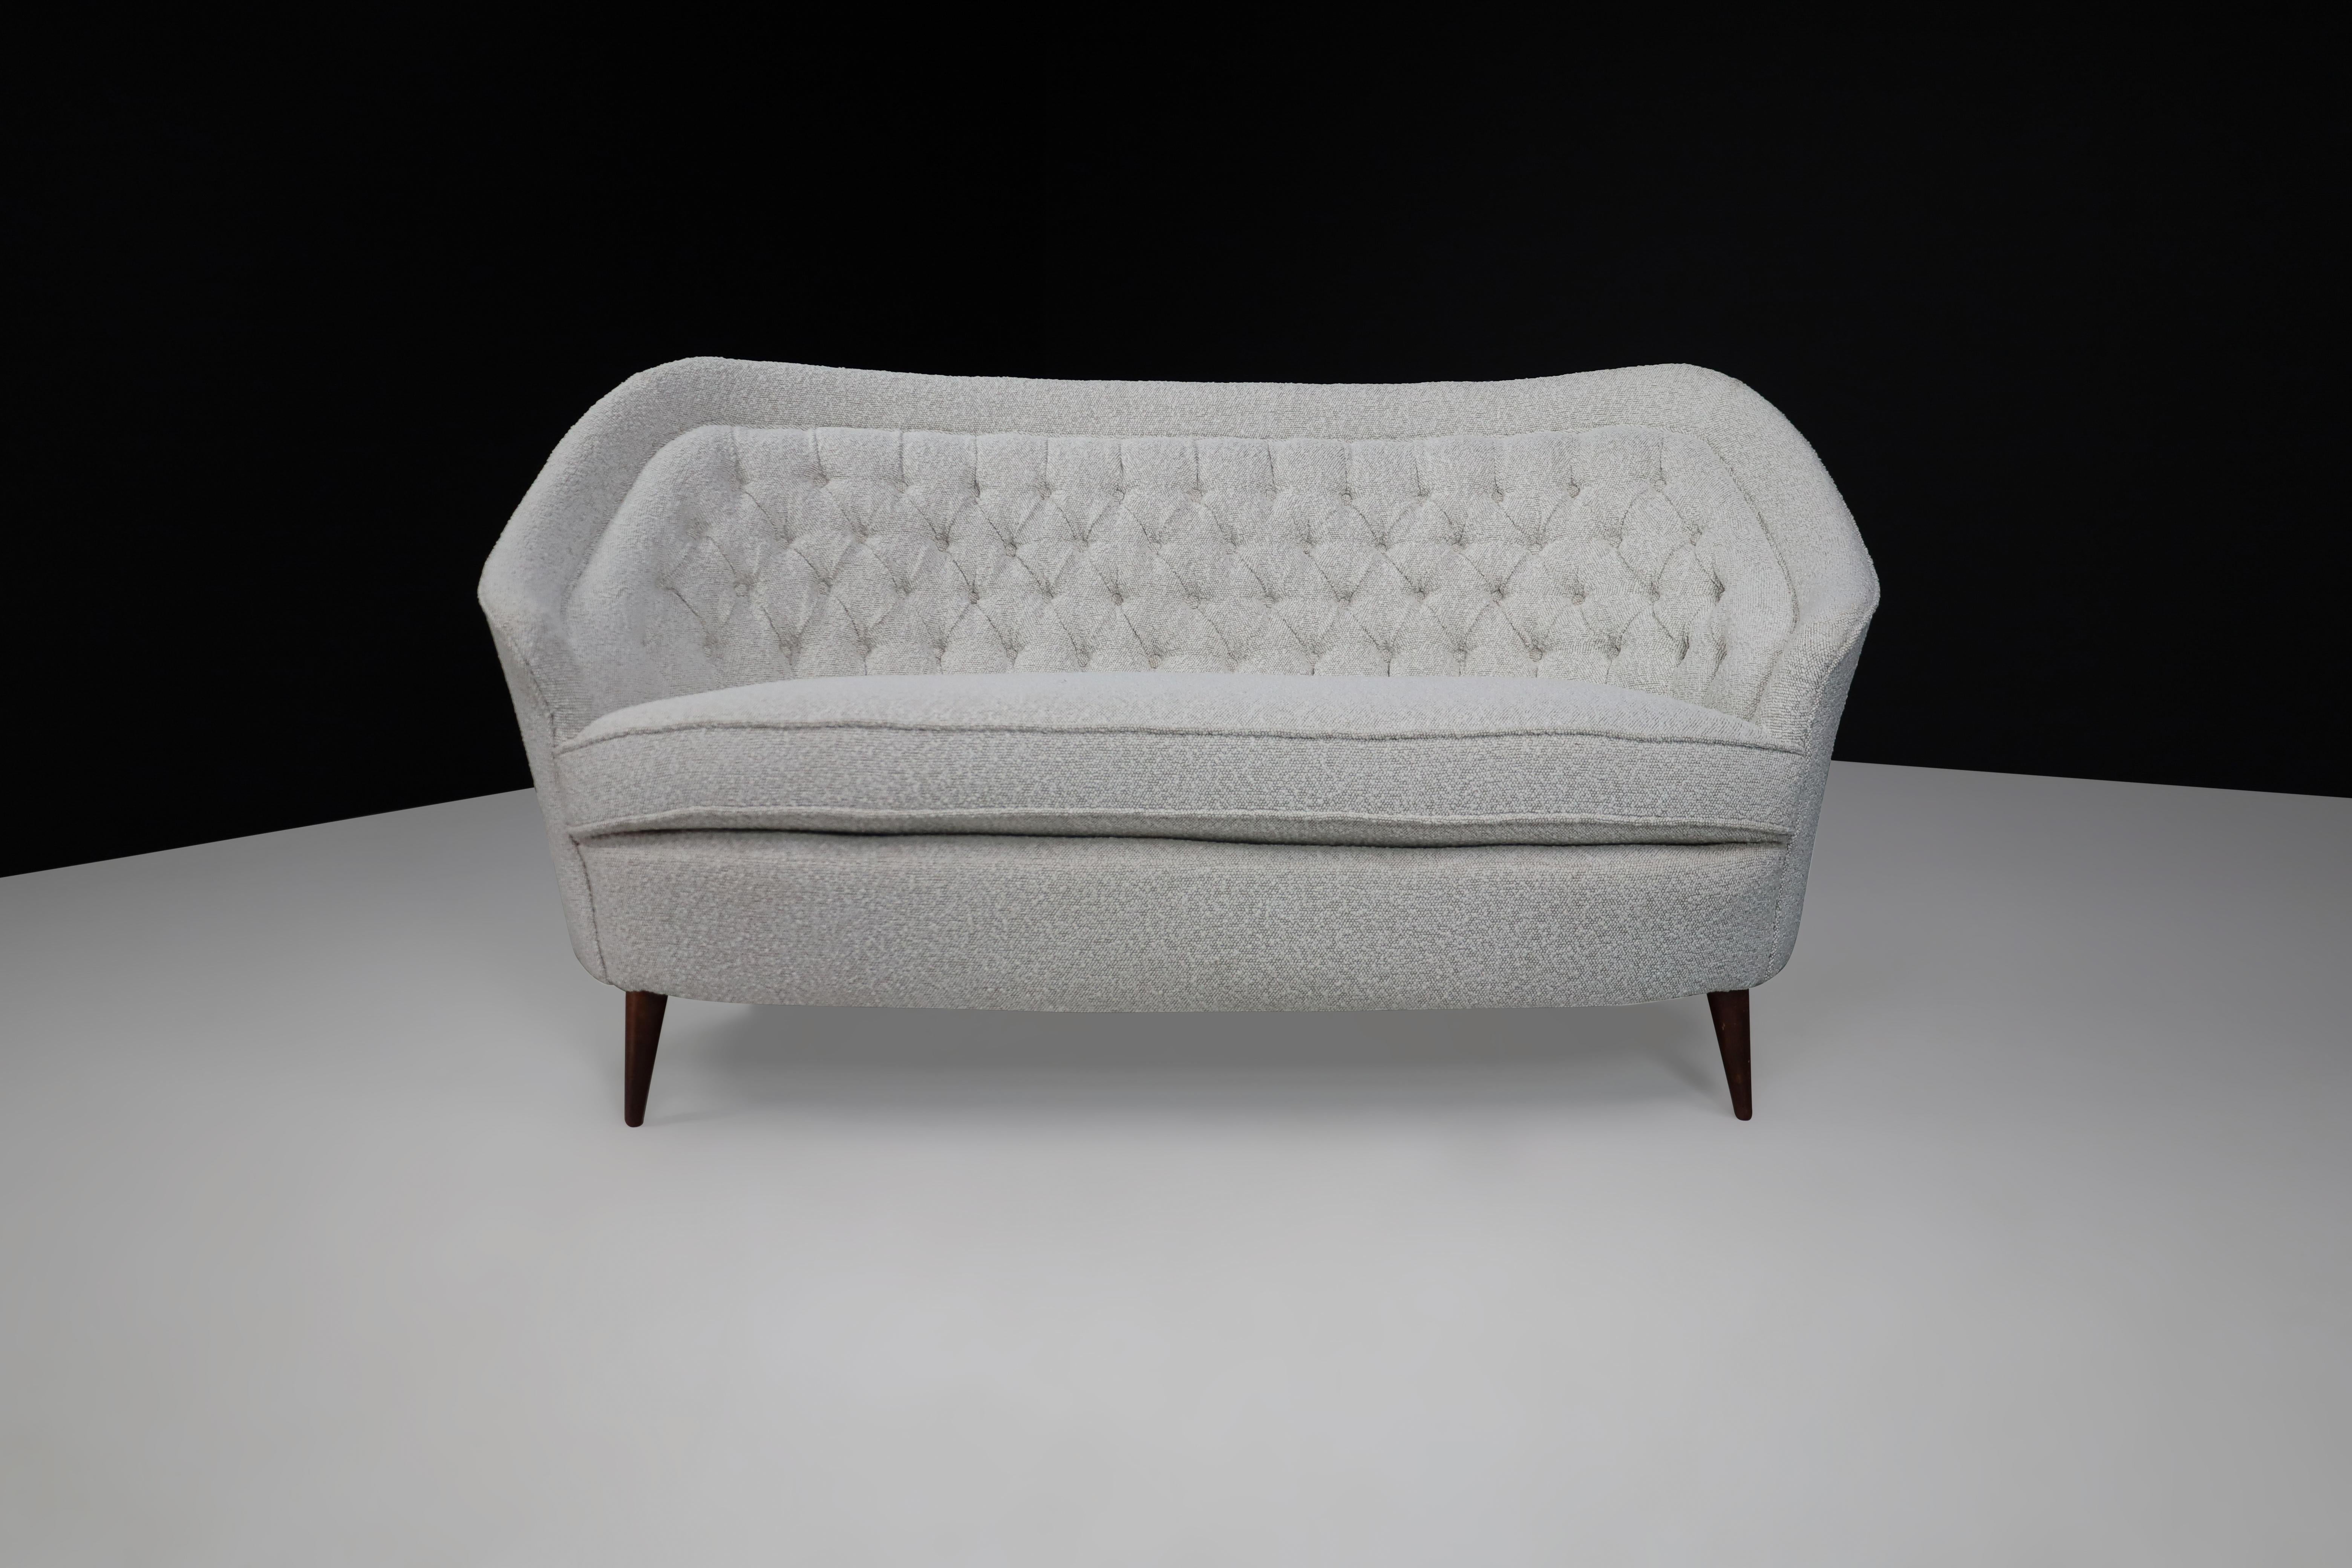 Gio Ponti for Casa E Giardino Midcentury Sofa in Bouclé Upholstery Italy 1940s  For Sale 3